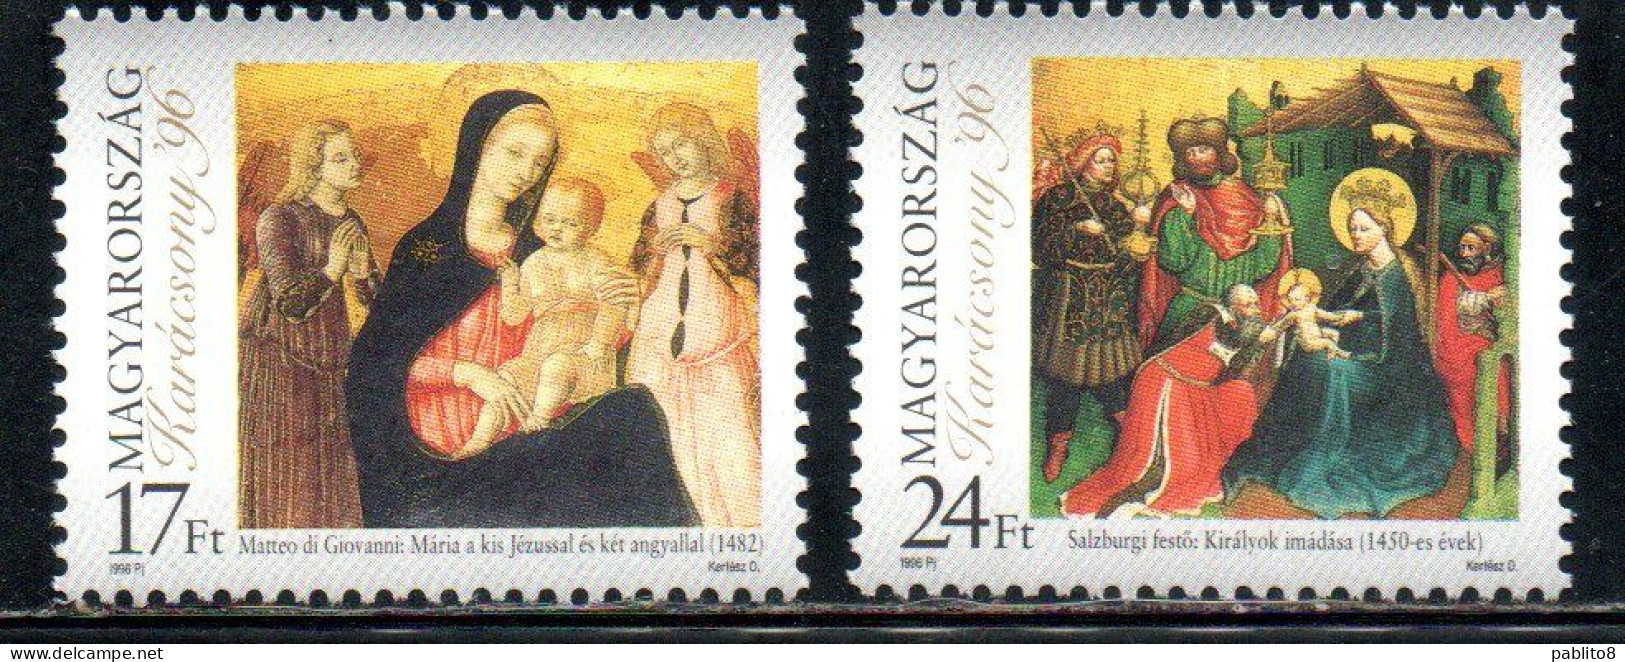 HUNGARY UNGHERIA MAGYAR 1996 CHRISTMAS NATALE NOEL WEIHNACHTEN NAVIDAD COMPLETE SET SERIE COMPLETA MNH - Unused Stamps